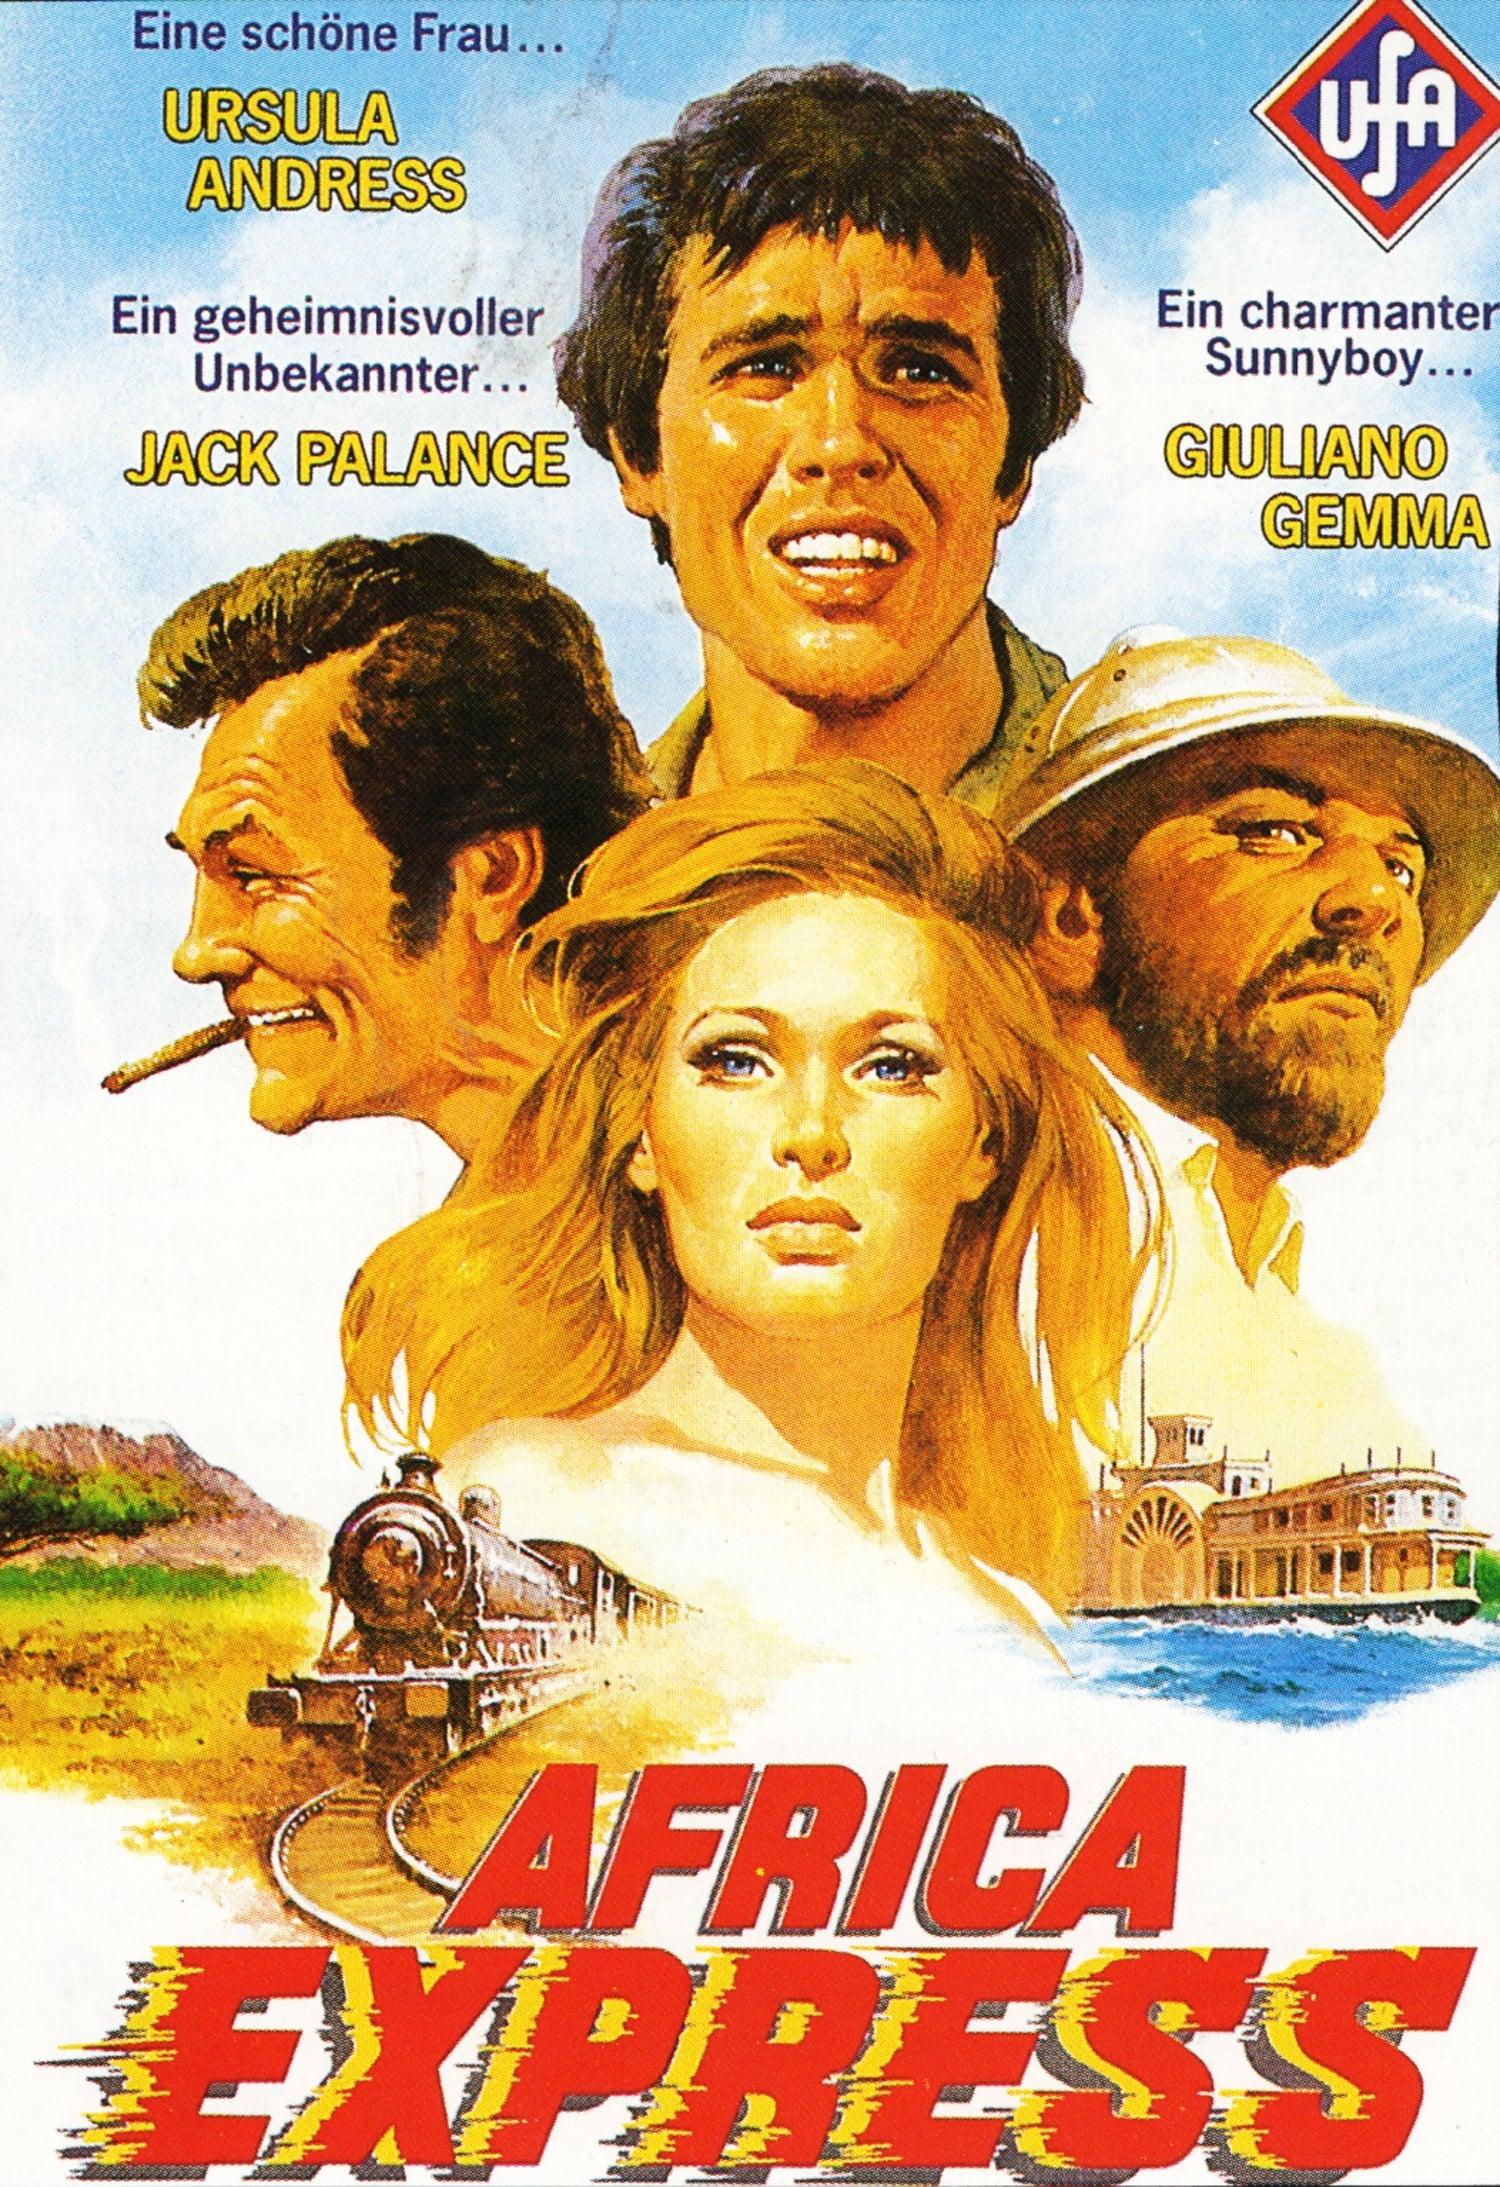 Africa Express poster